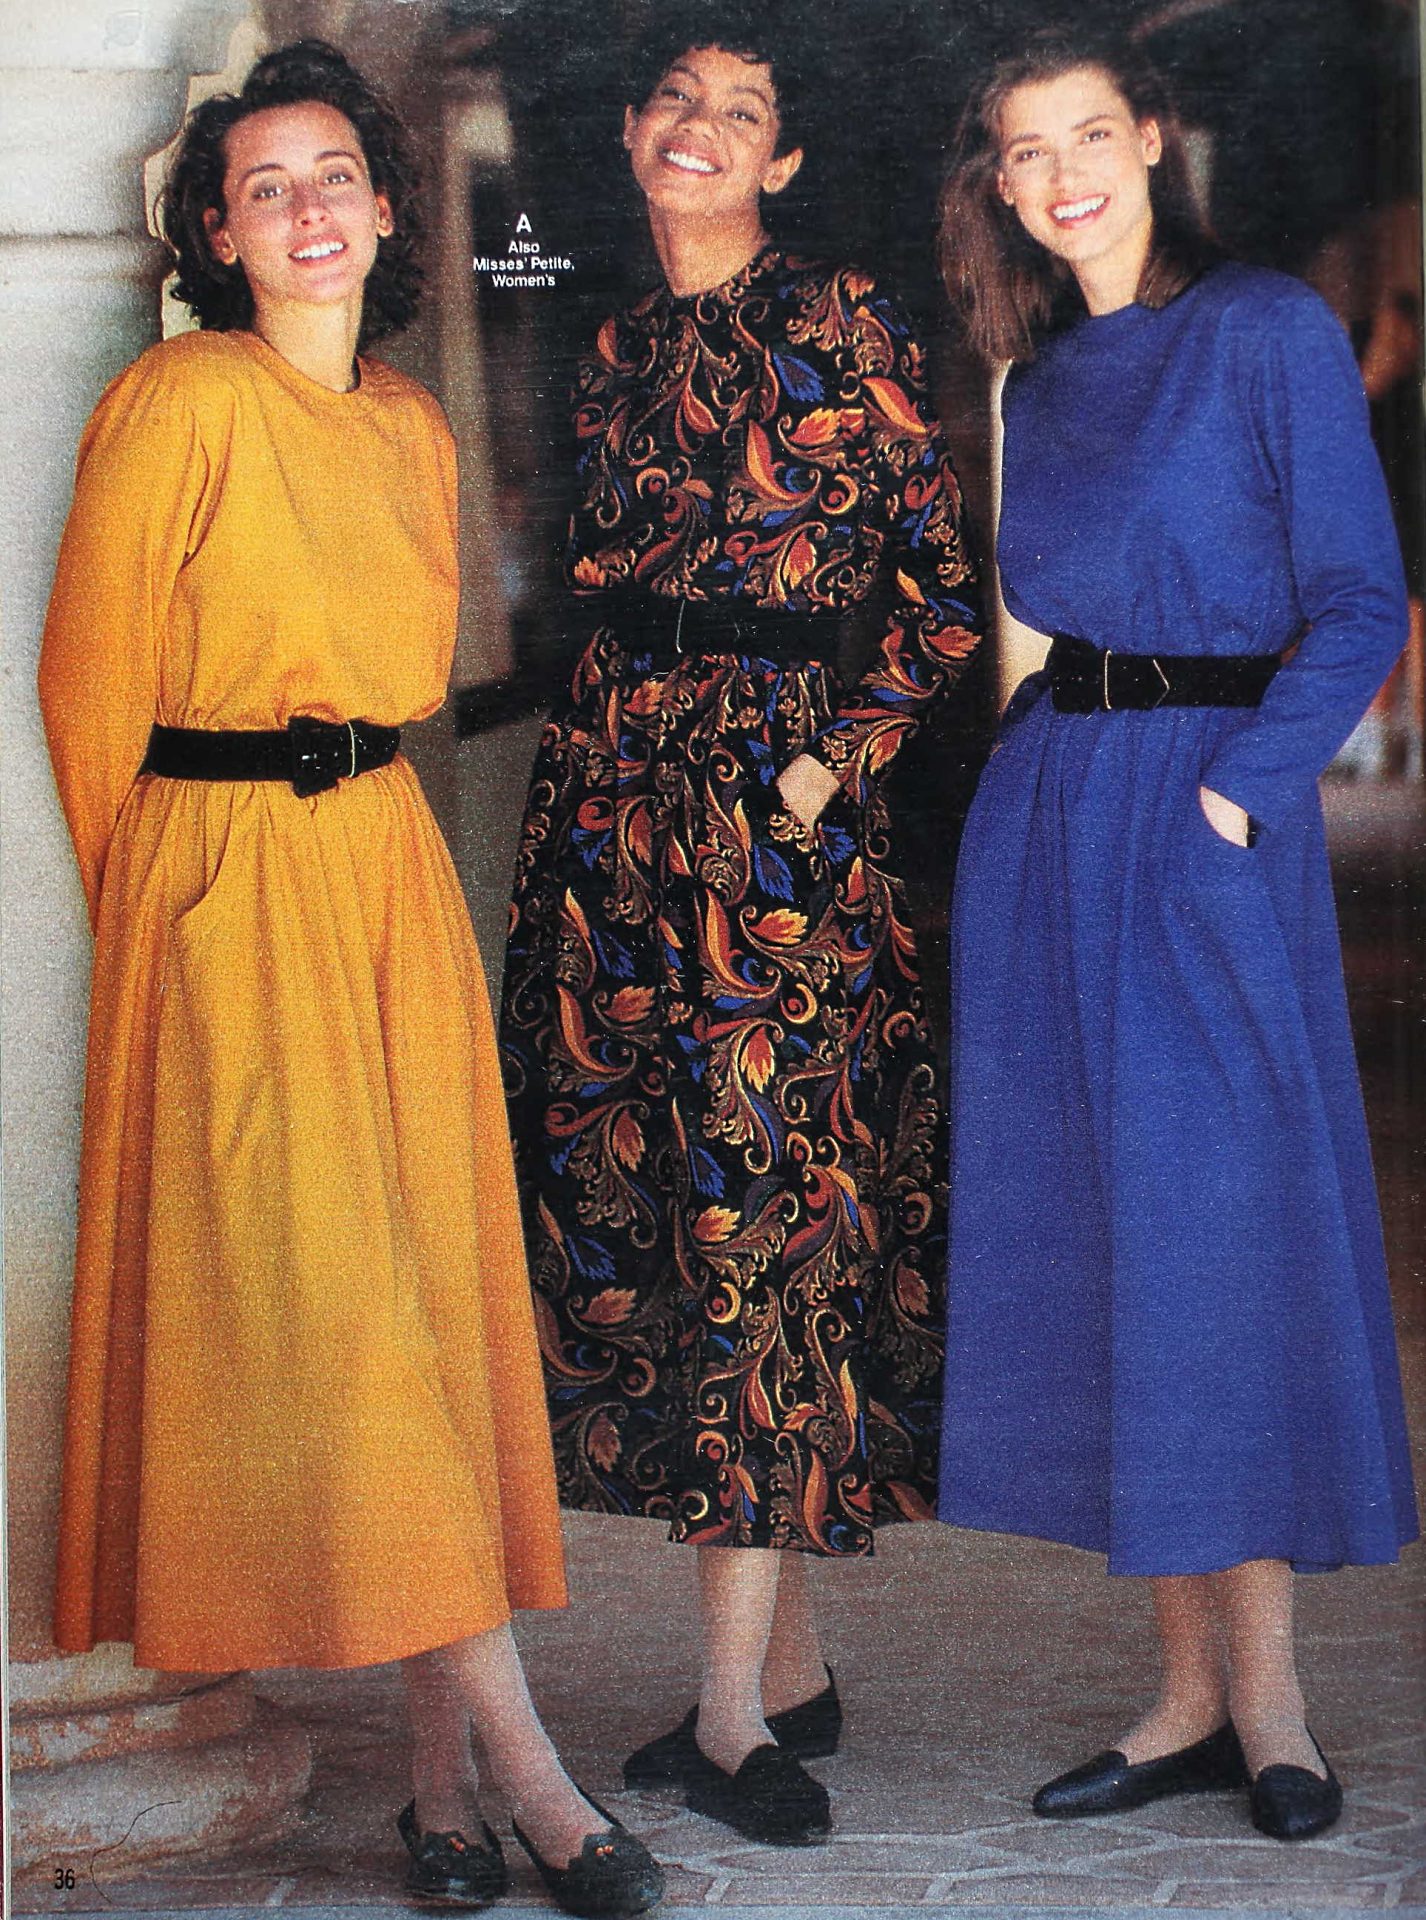 1990s Fashion 90s Fashion Trends For Women Laptrinhx News